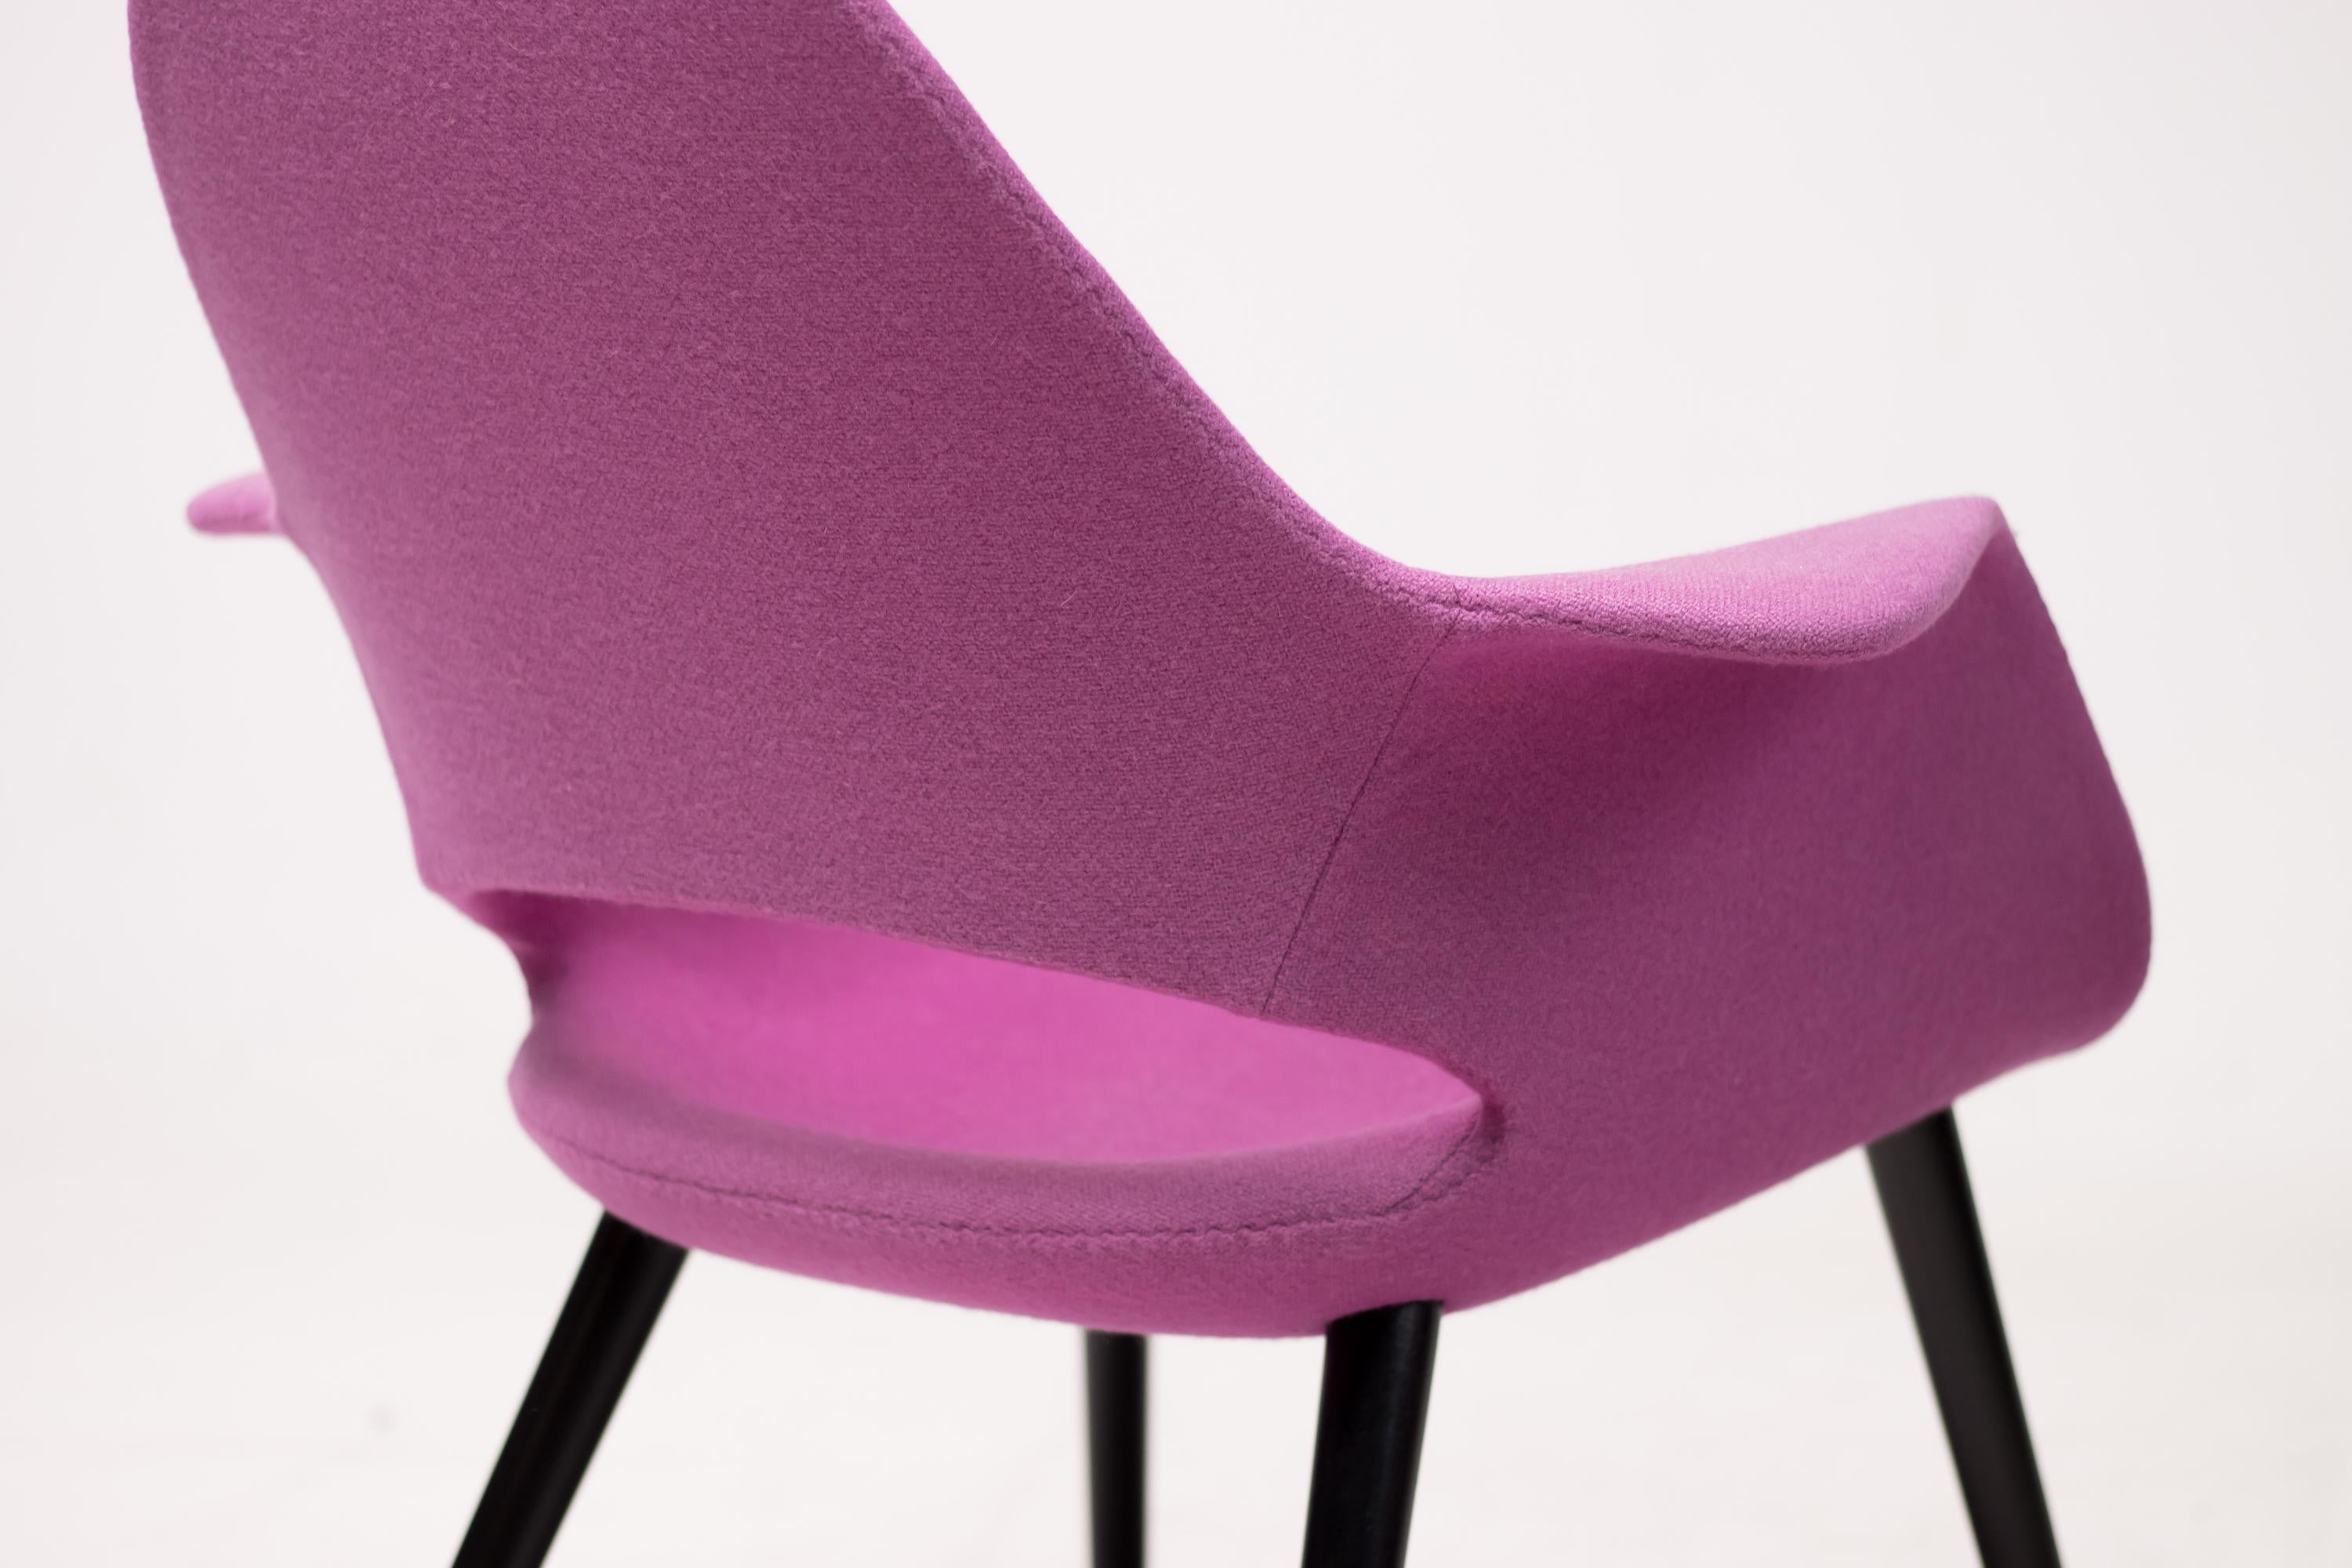 Dyed Lilac Organic Chairs by Charles Eames & Eero Saarinen